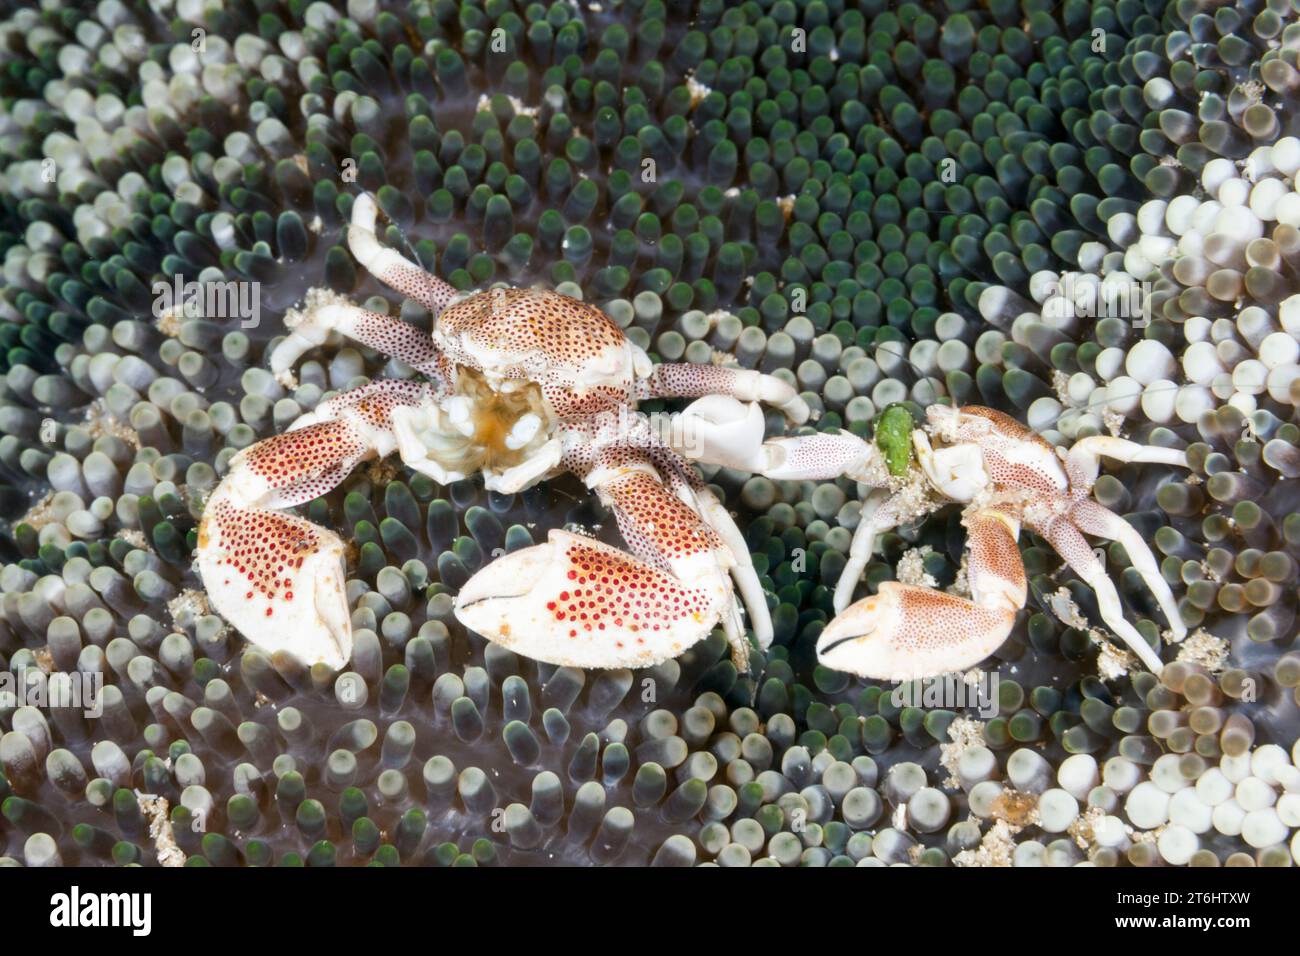 Porcelain Crab in Anemone, Neopetrolisthes maculatus, Raja Ampat, West Papua, Indonesia Stock Photo